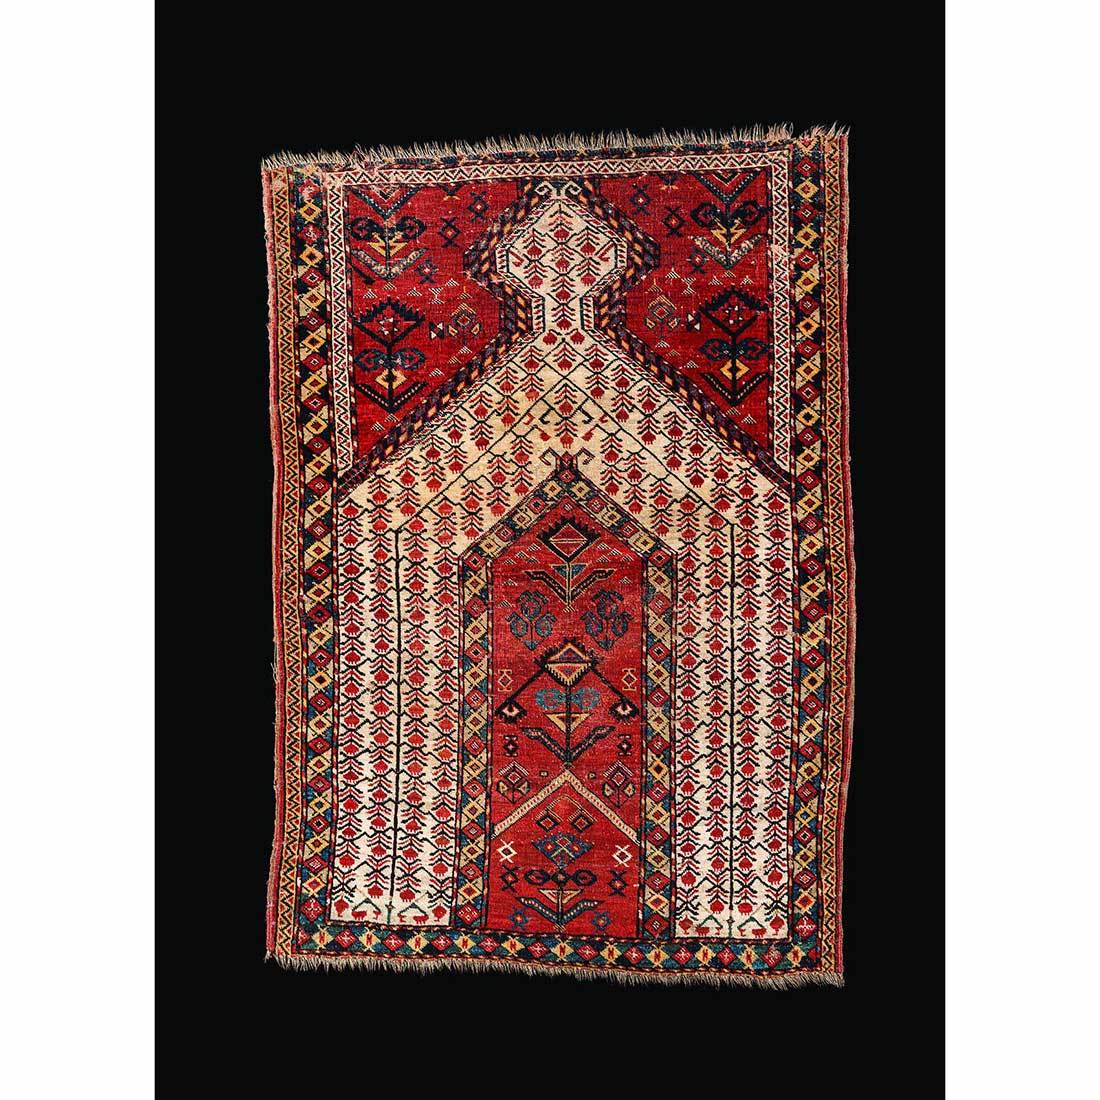 Turkmen Carpets: The Neville Kingston Collection